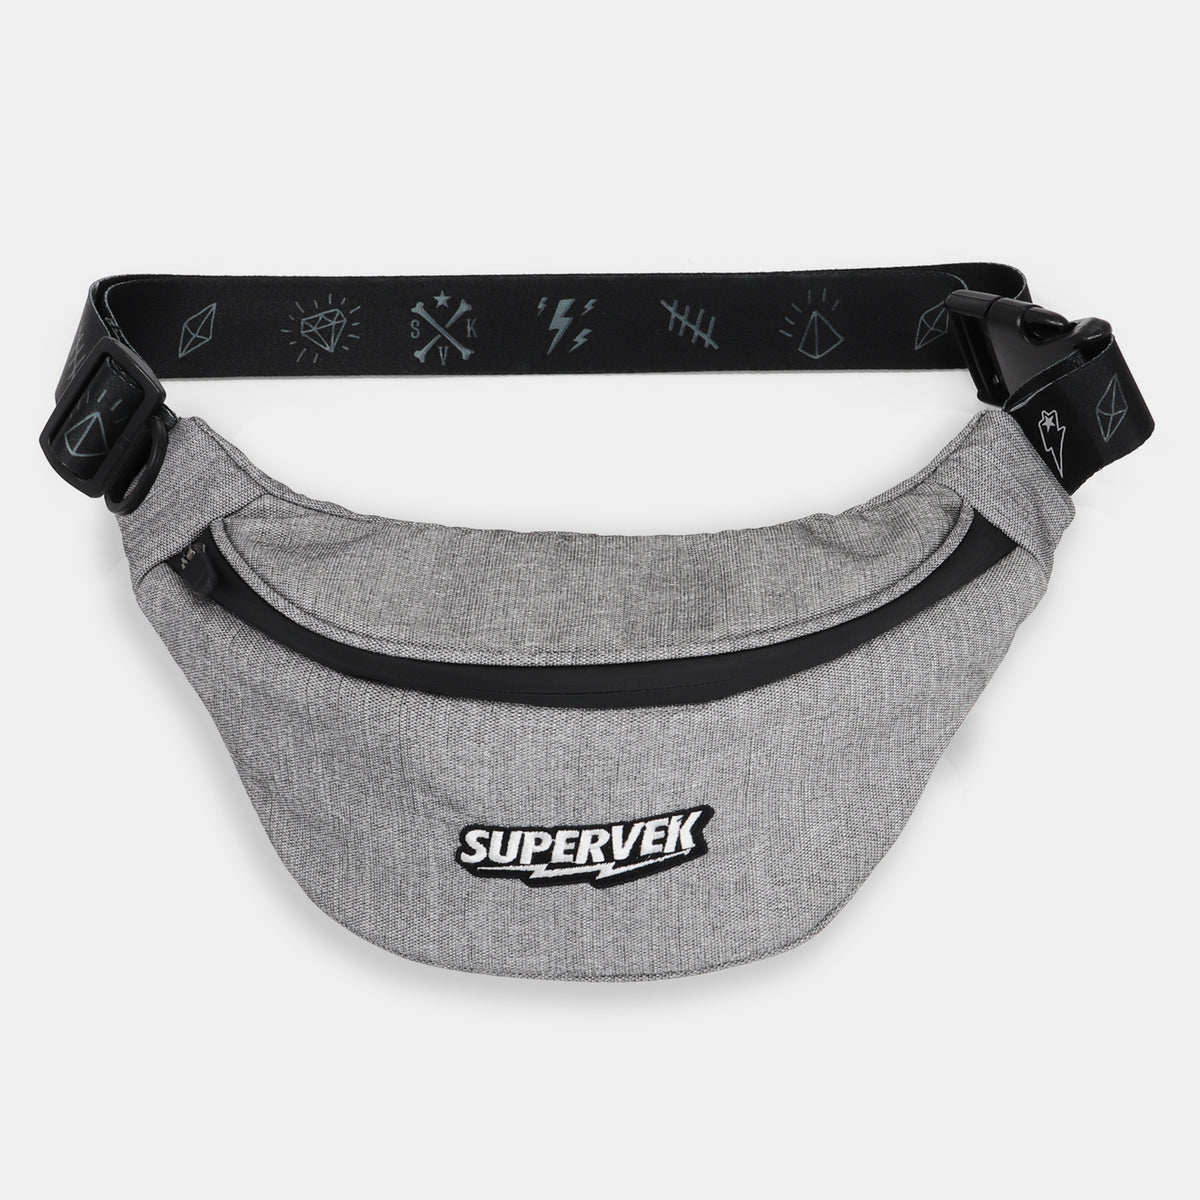 Supervek Crossbody Slinger - VeKhadi - Urban Functional Fanny Hip Bag for Everyday Essentials